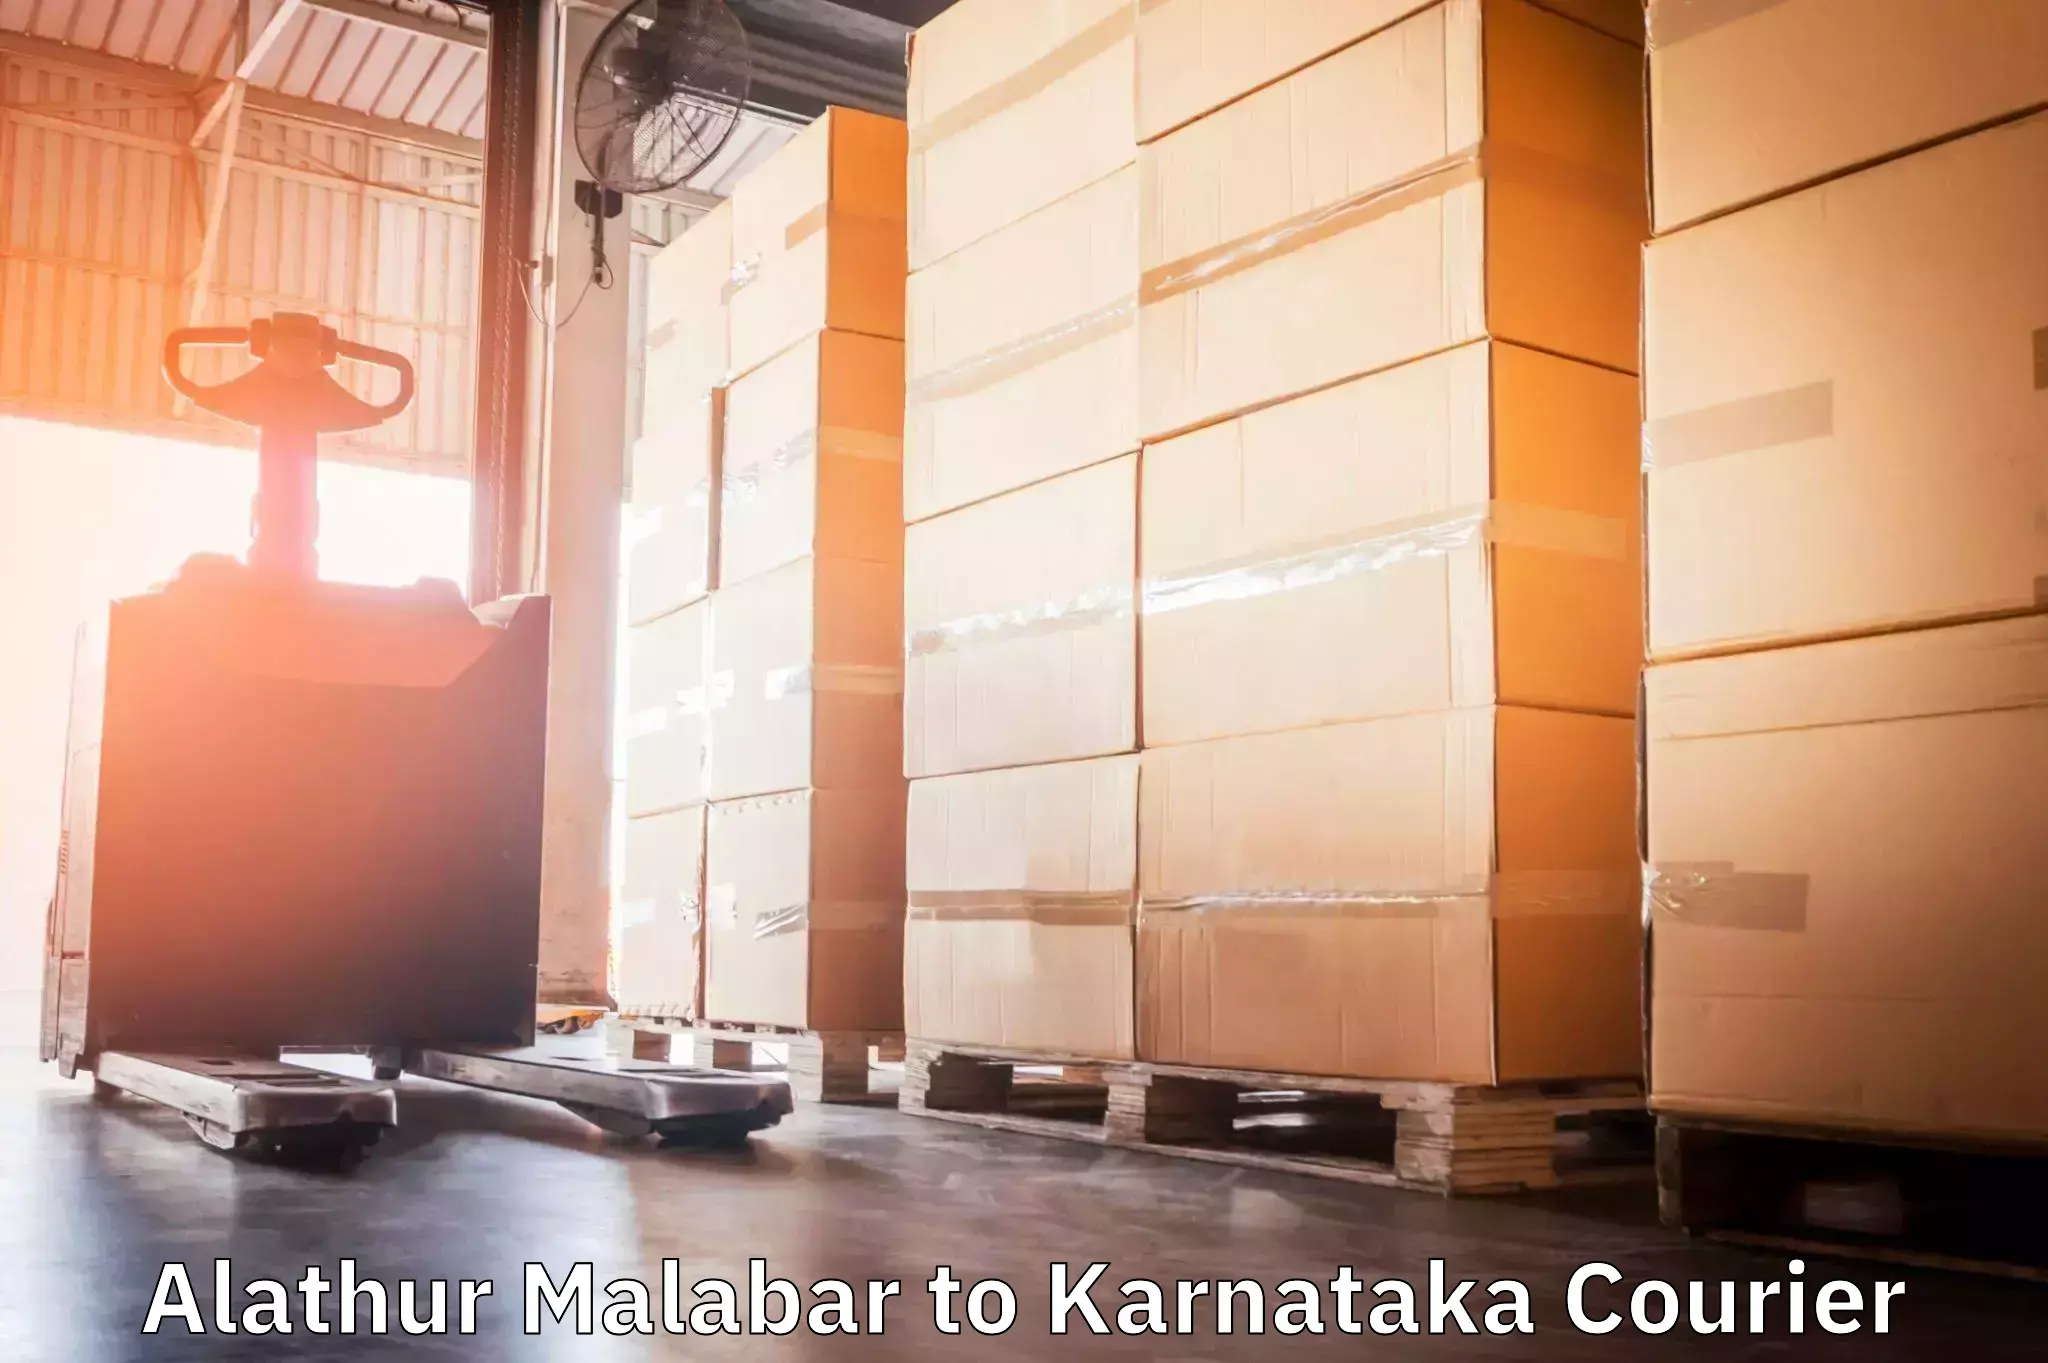 Expedited shipping methods Alathur Malabar to Karnataka